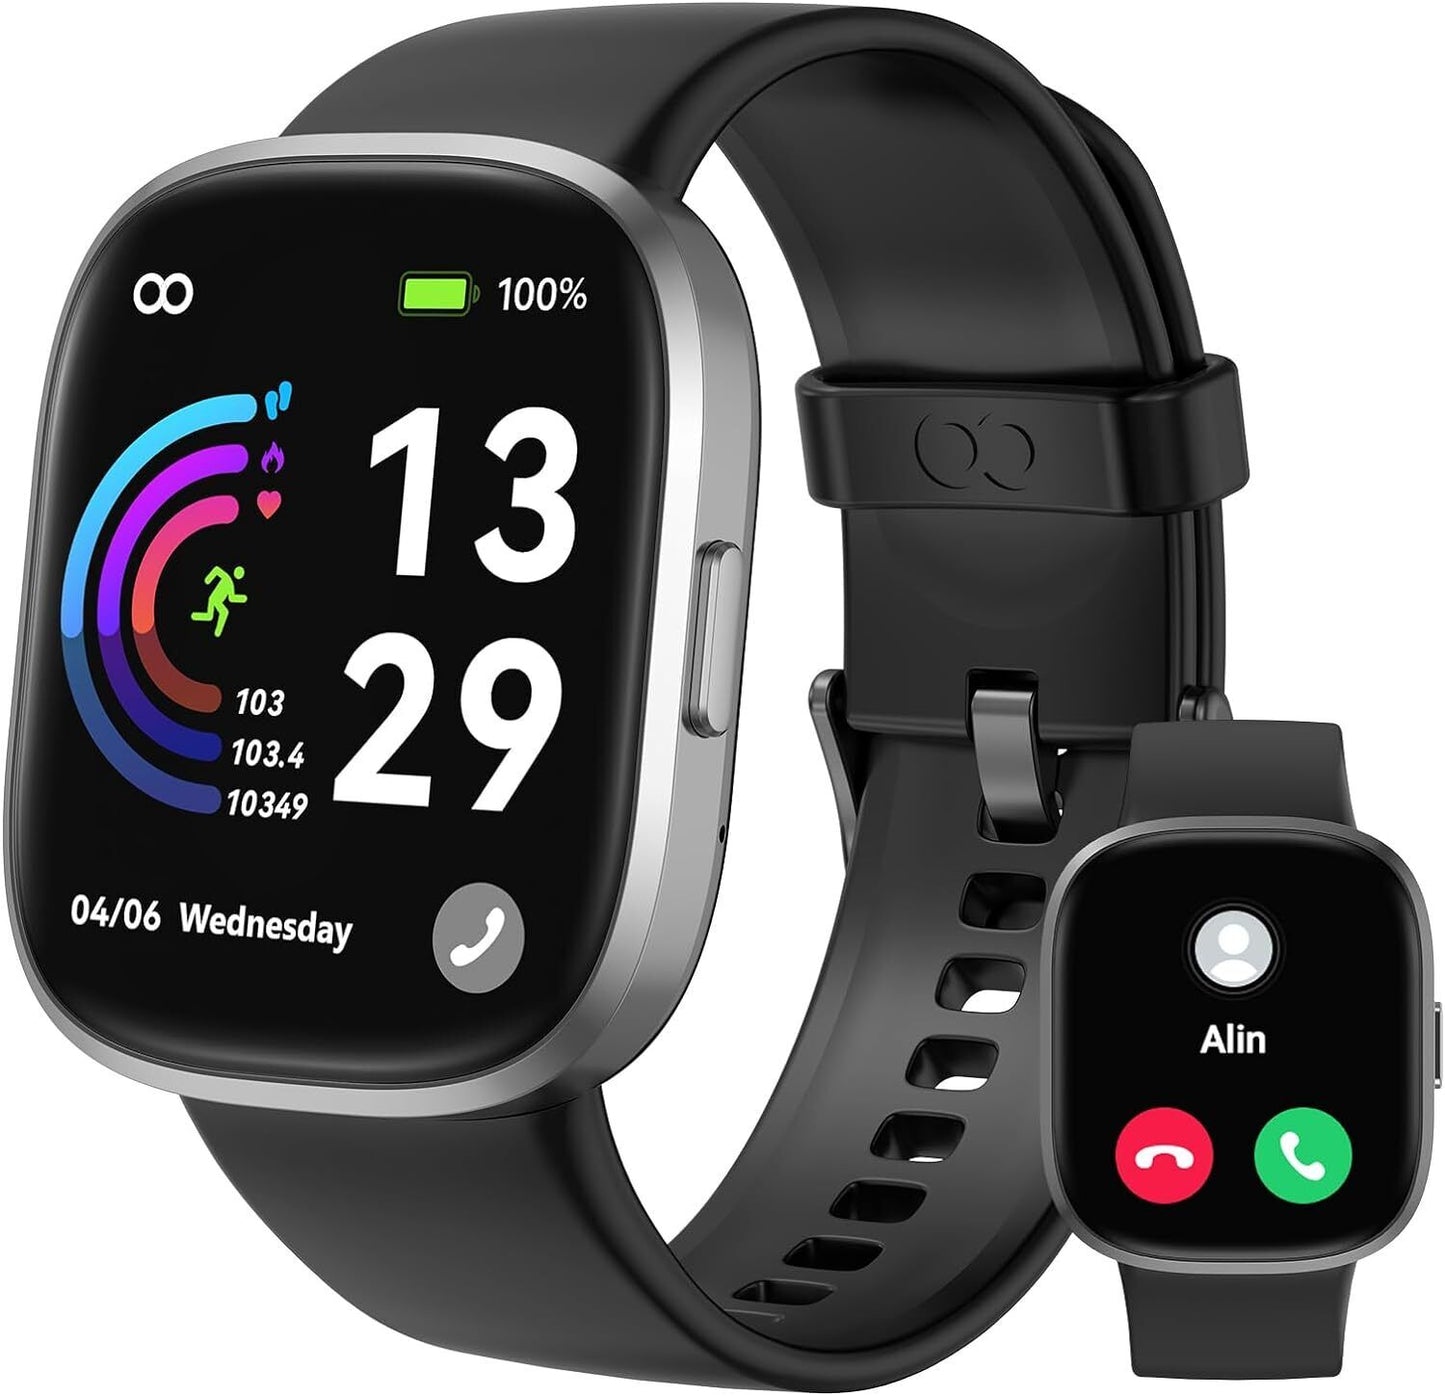 anyloop 46mm HD Smart Watch - Call, Fitness & Health Tracker, IP68 Waterproof